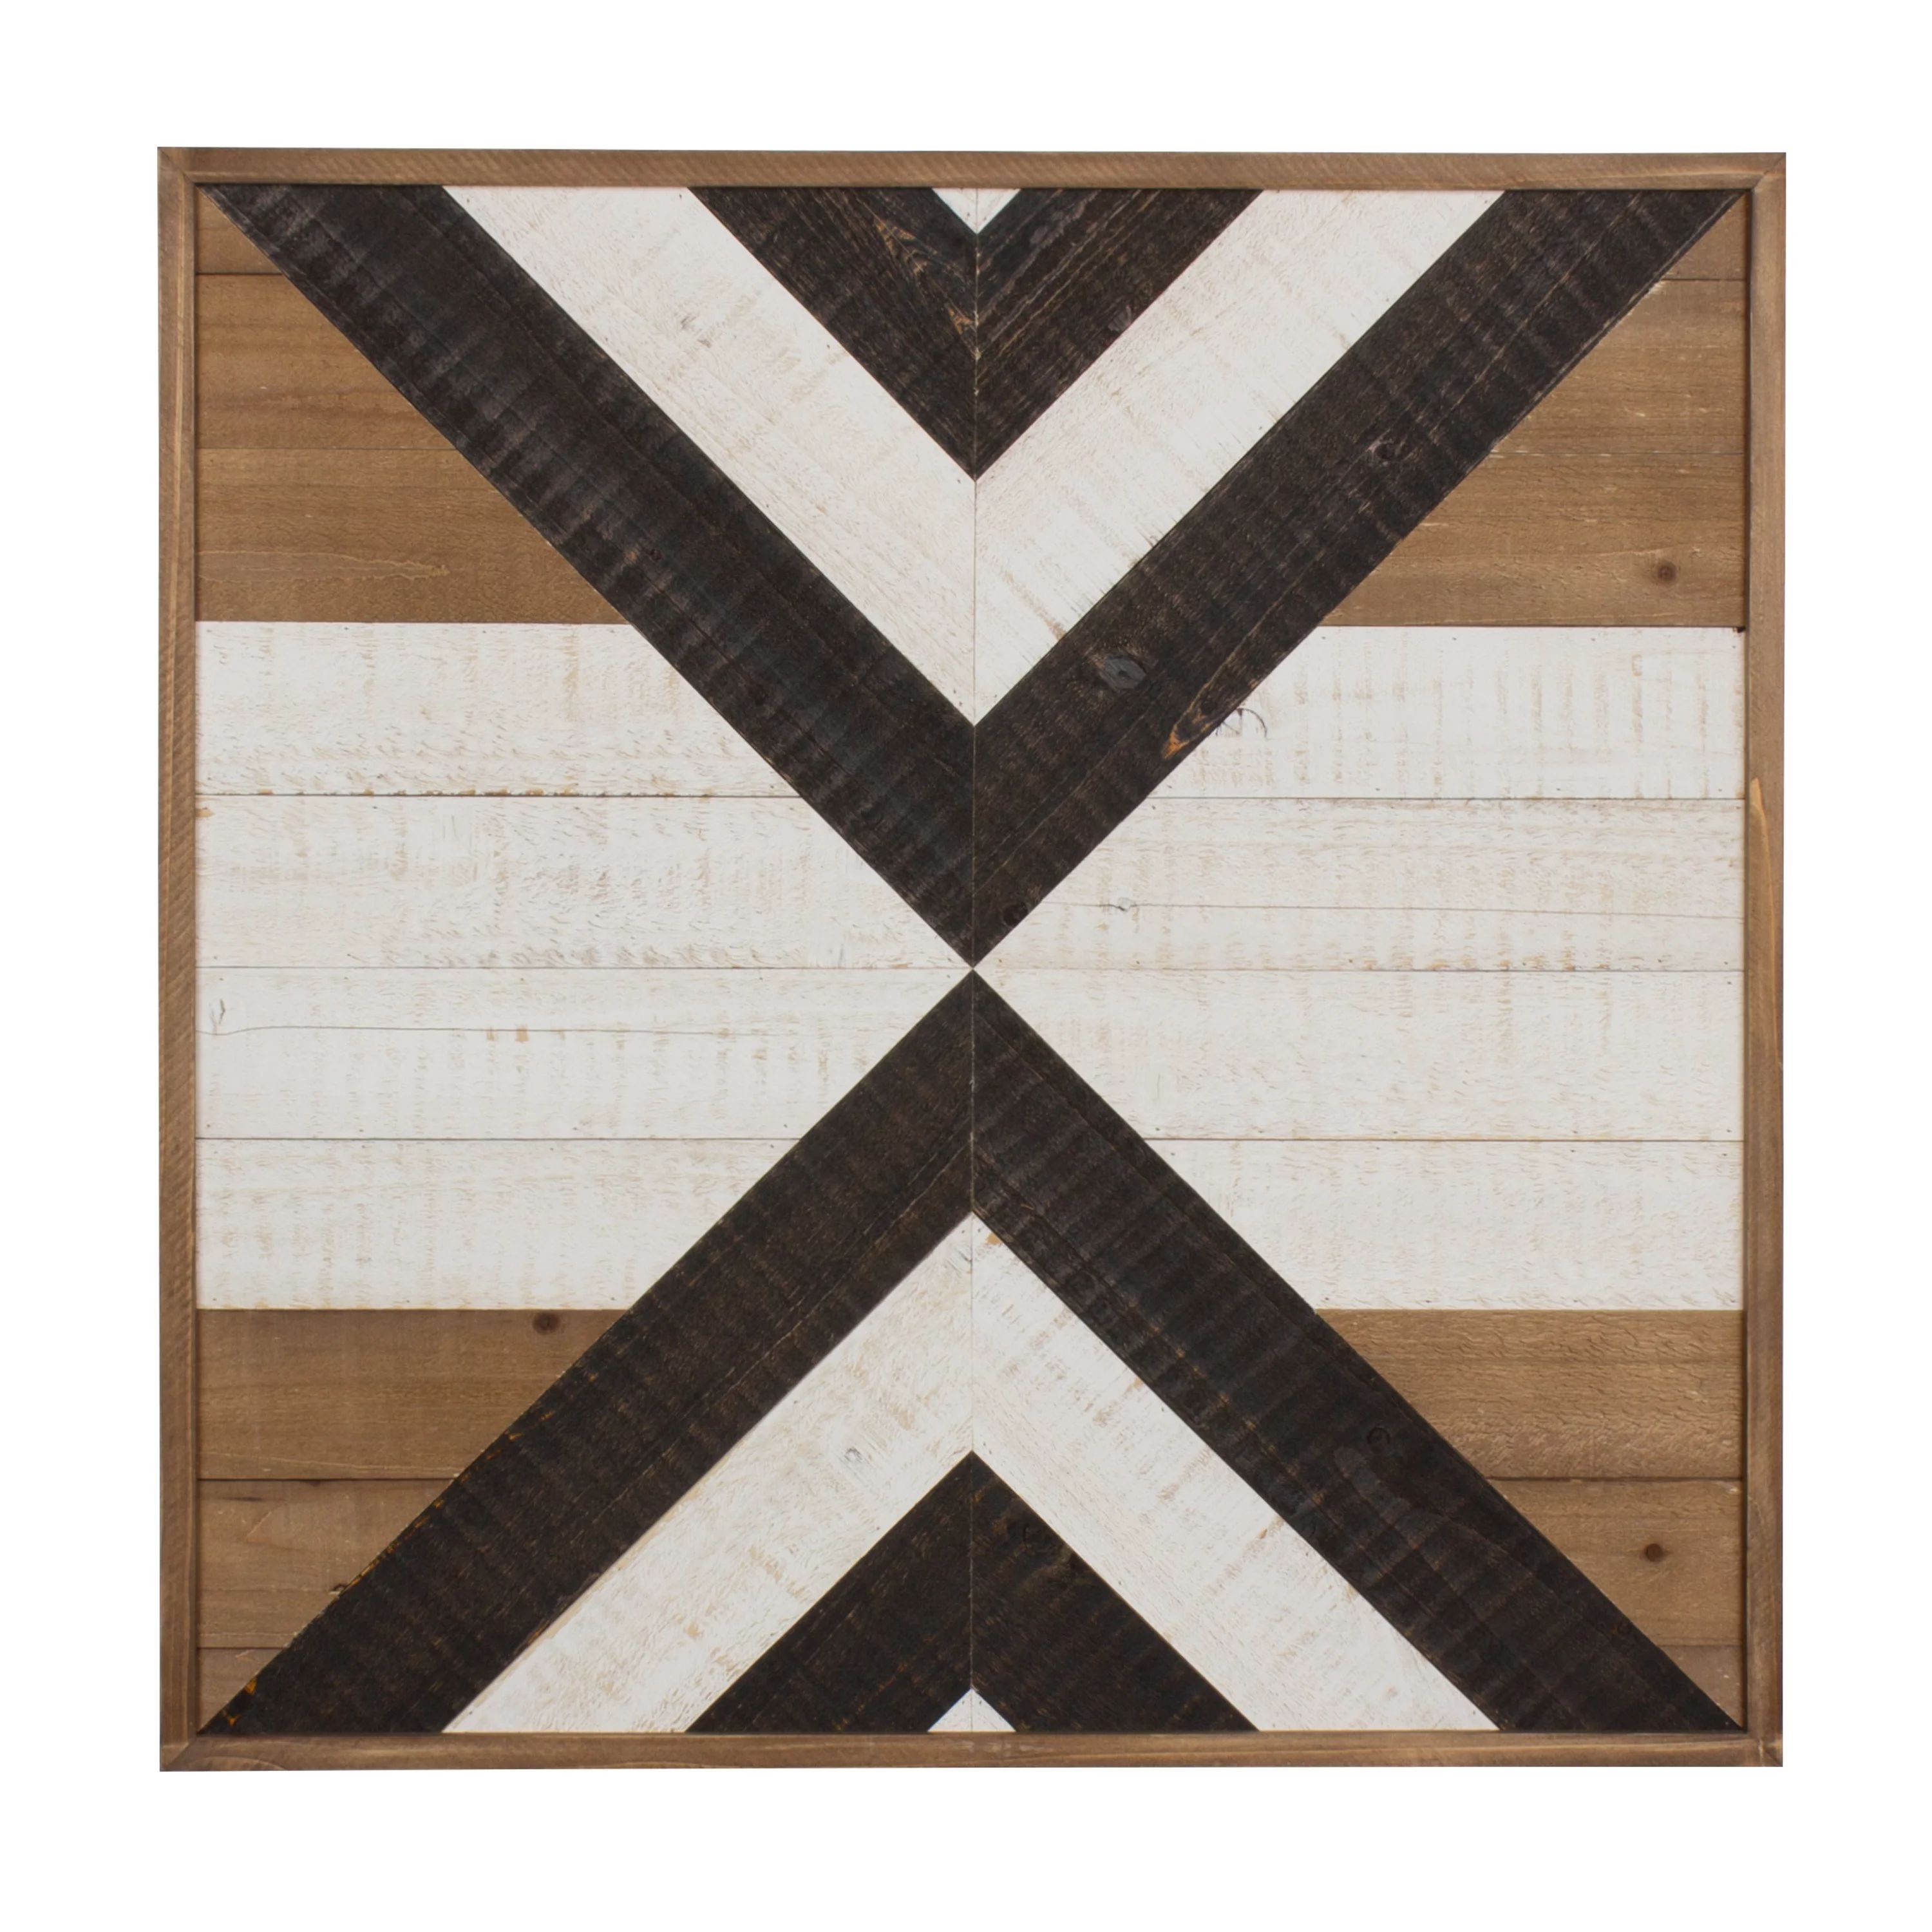 Kate and Laurel Baralt Shiplap Wood Plank Art, Black, White and Rustic Brown | Walmart (US)